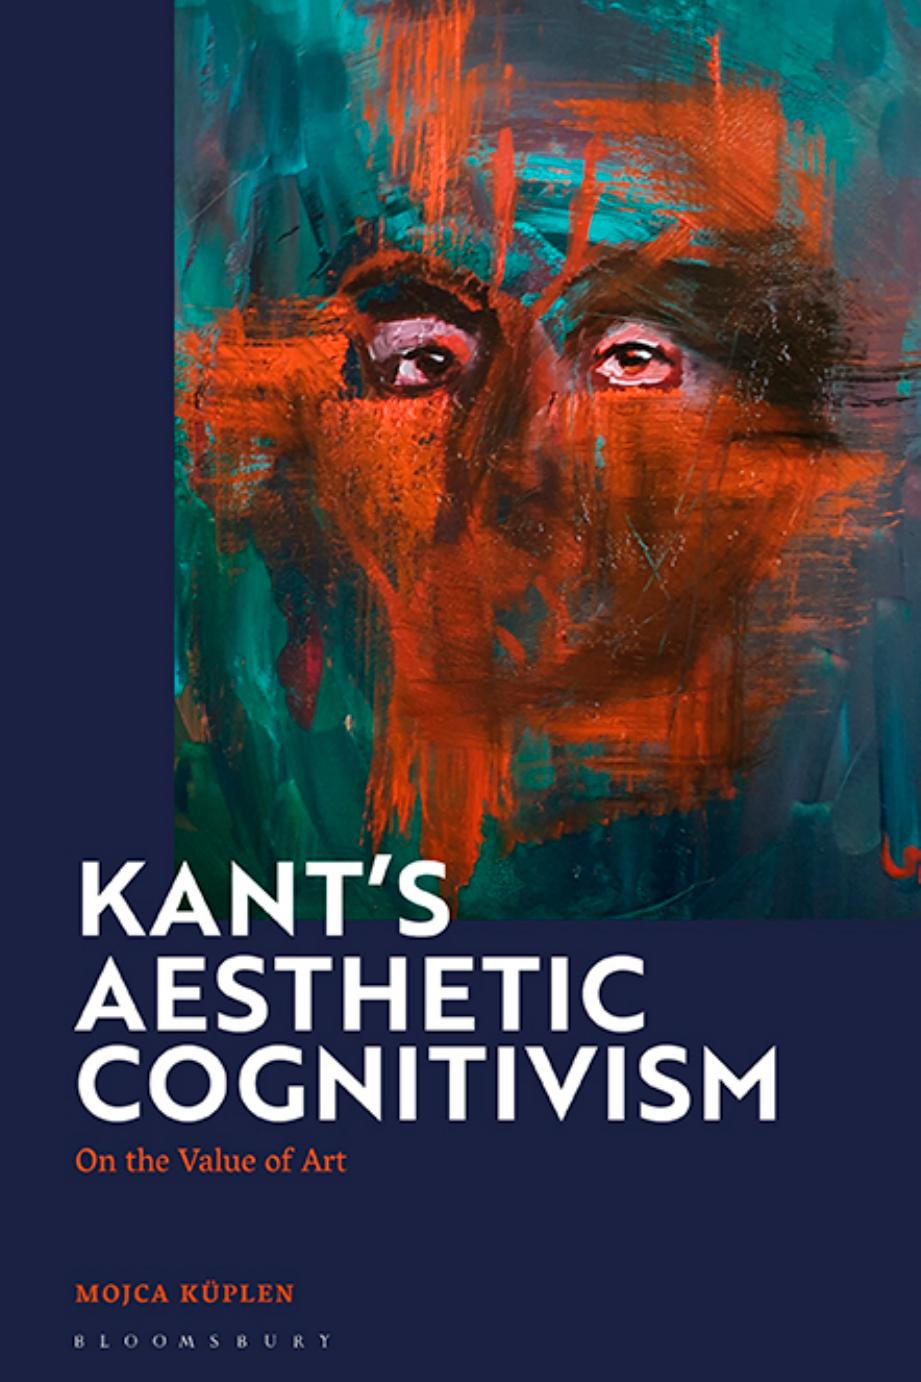 Kant's Aesthetic Cognitivism: On the Value of Art by Mojca Kuplen